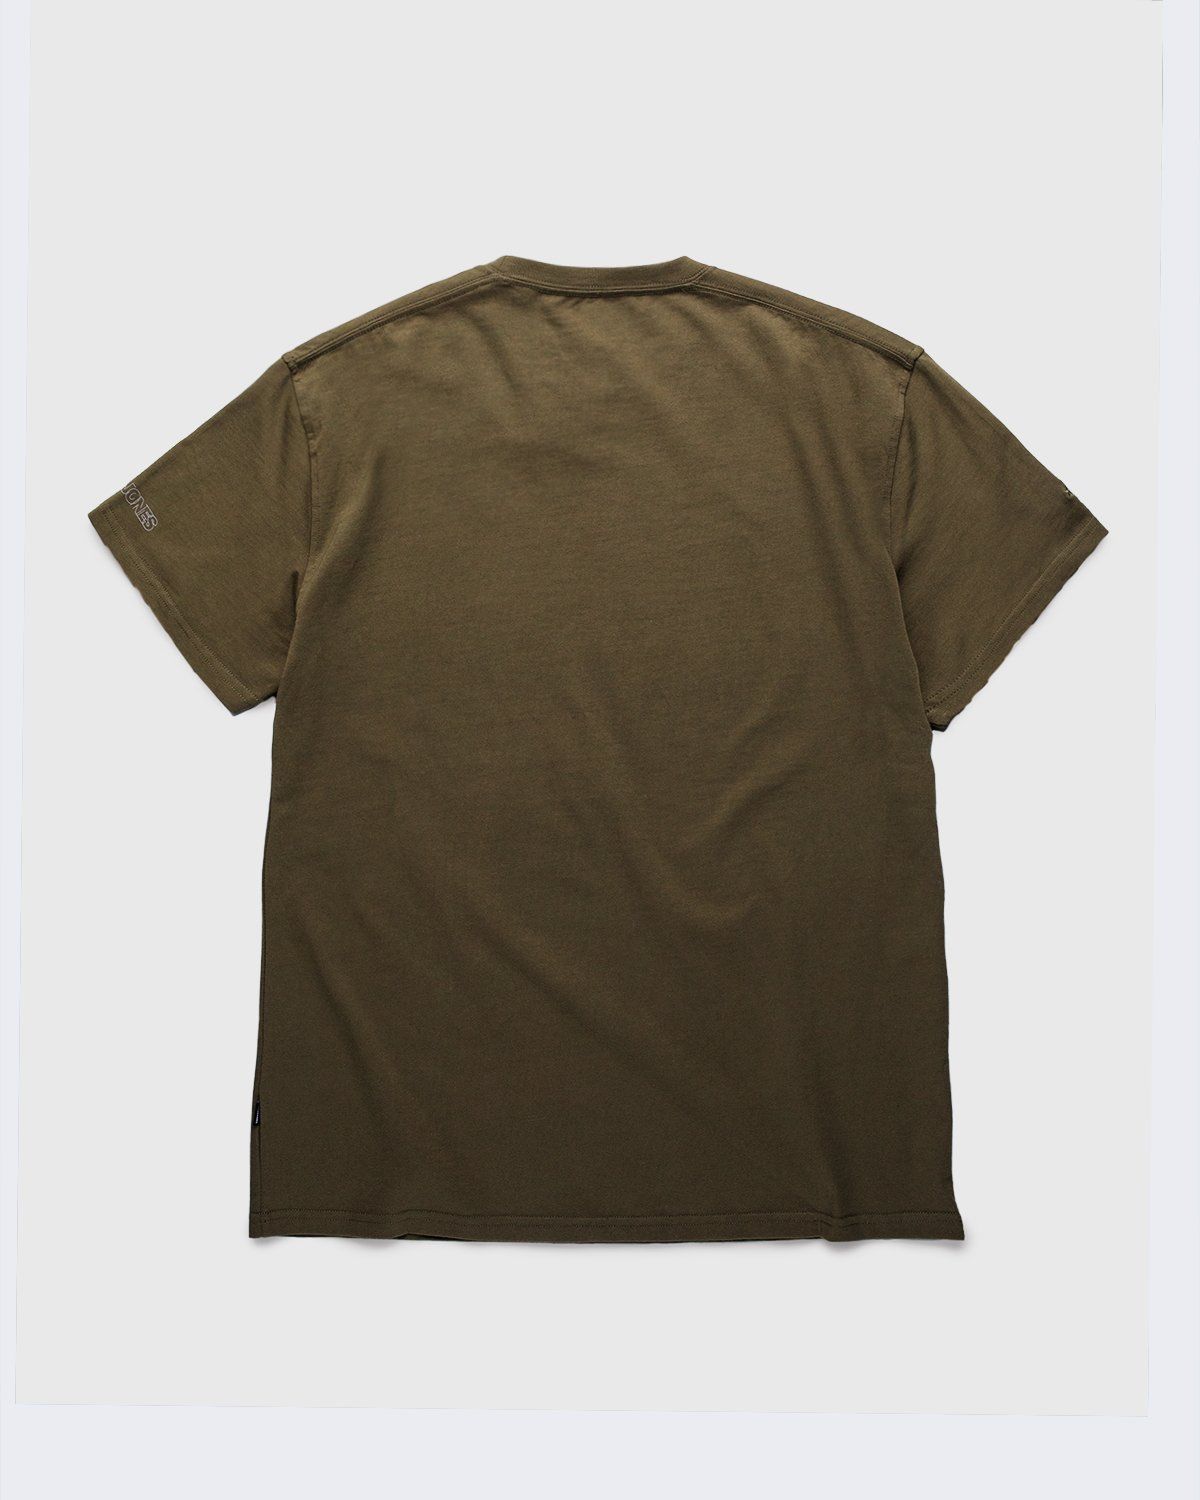 Converse x Kim Jones – T-Shirt Burnt Olive | Highsnobiety Shop